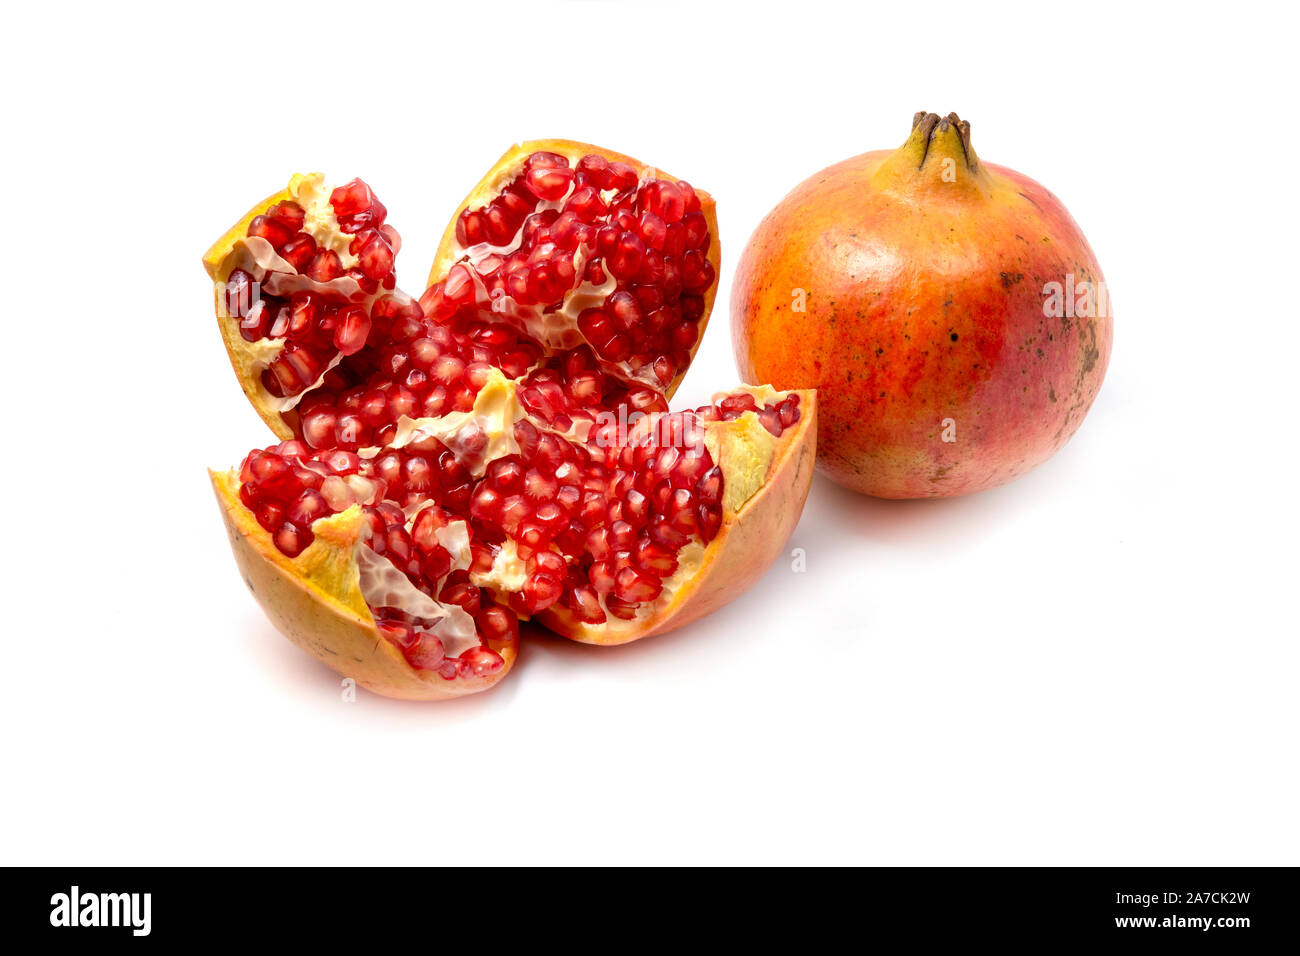 White pomegranate (Punica granatum) on a white background Stock Photo